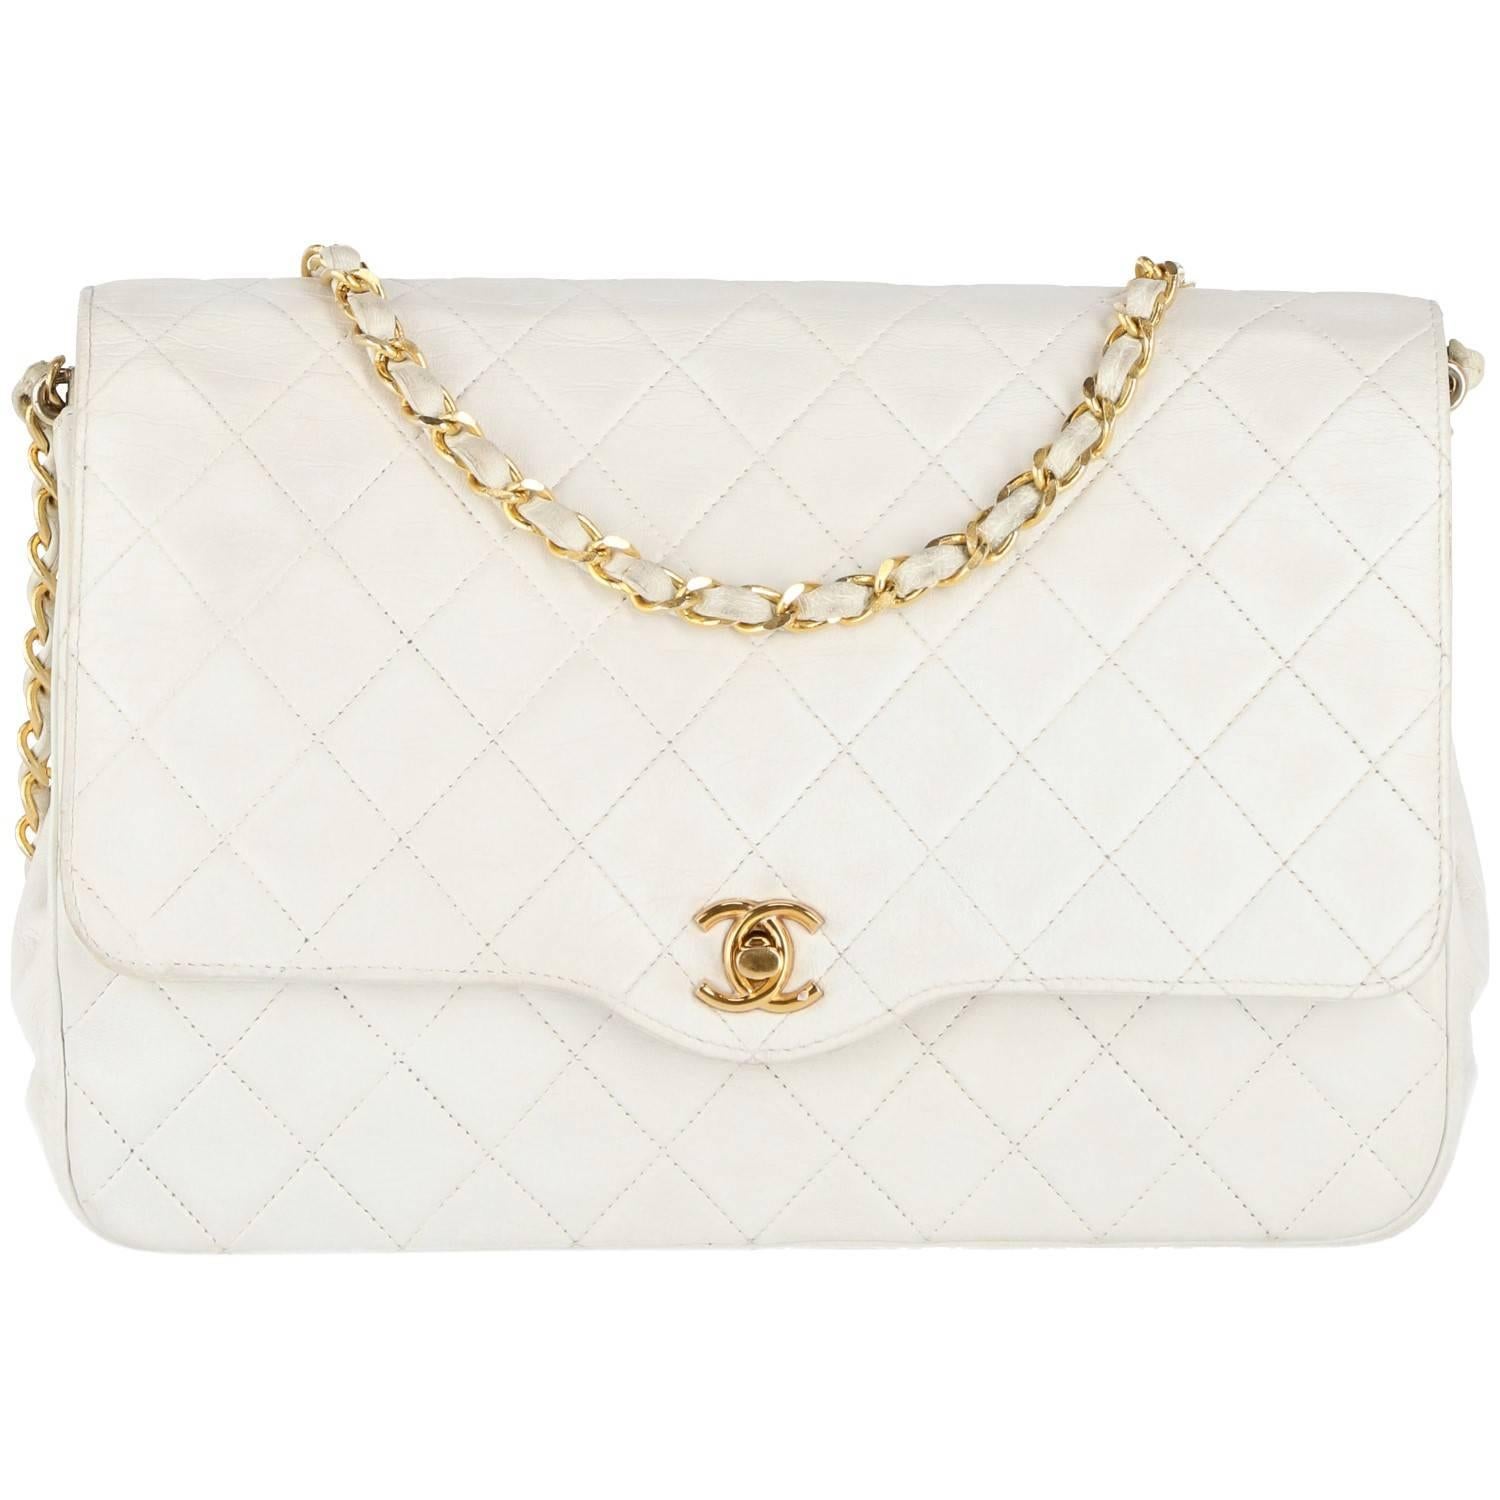 Chanel White Leather Vintage Bag, 1980s